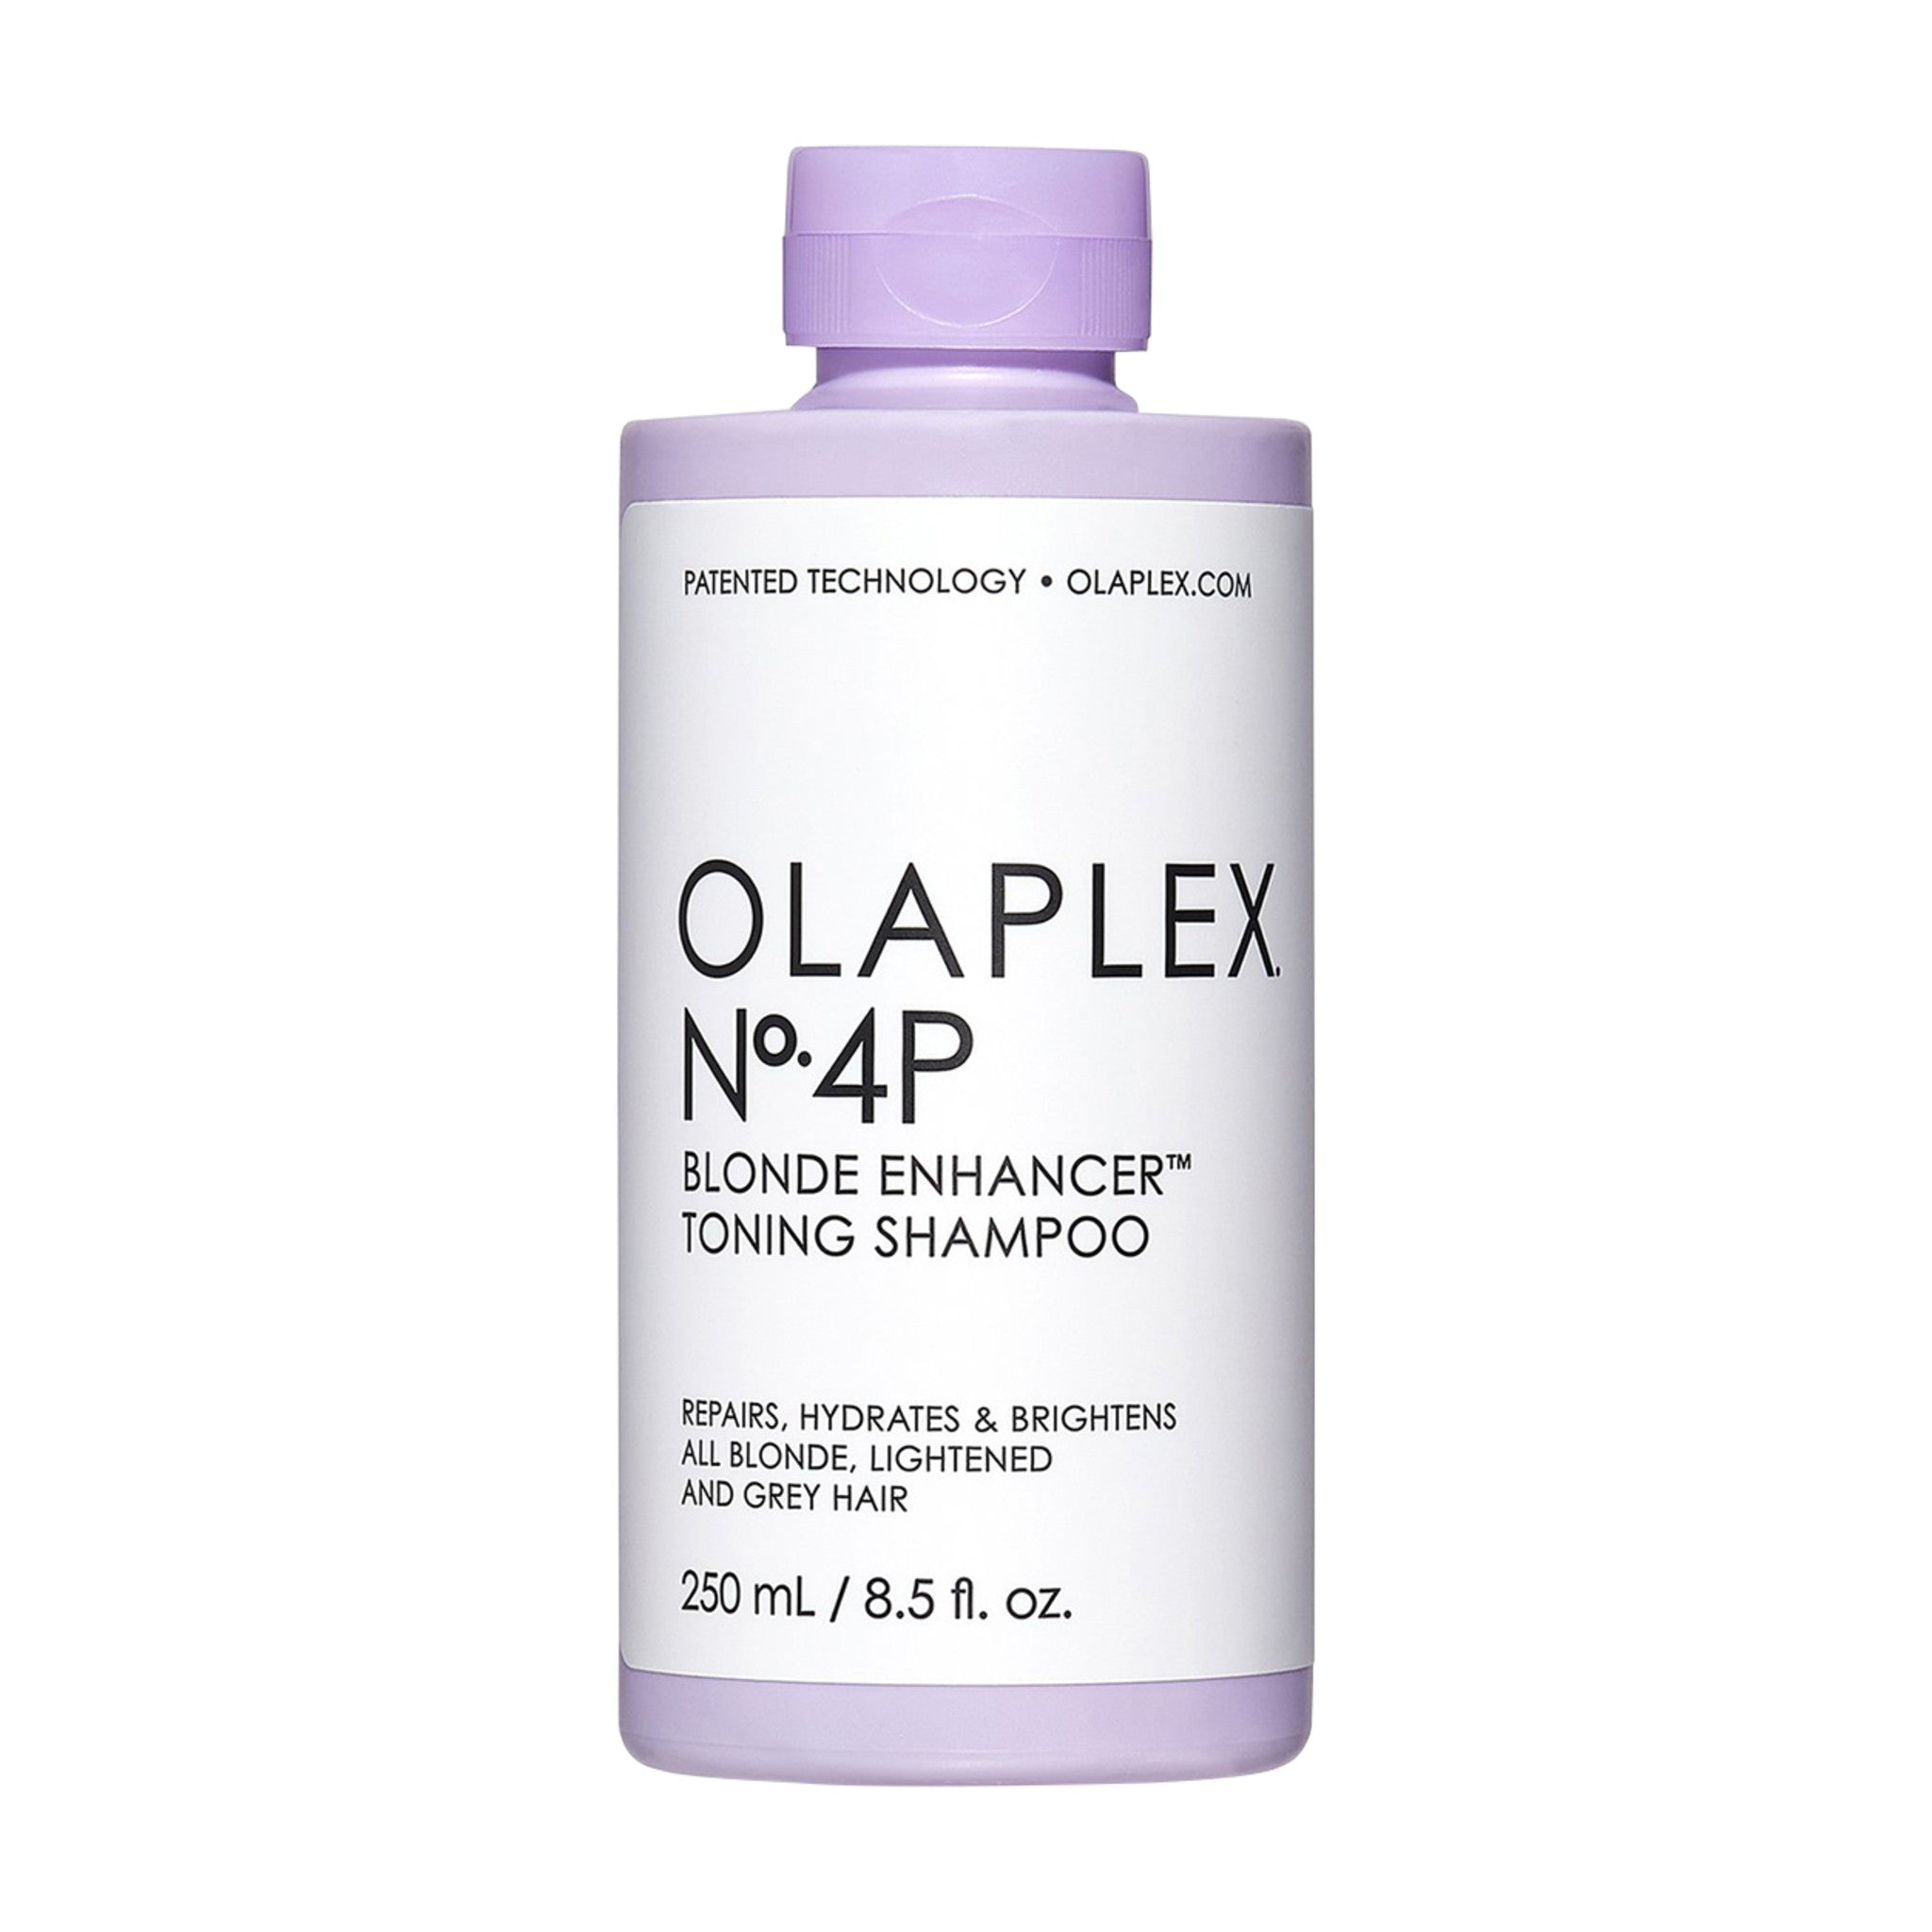 Olaplex No.4P Blonde Enhancer Toning Shampoo main image.